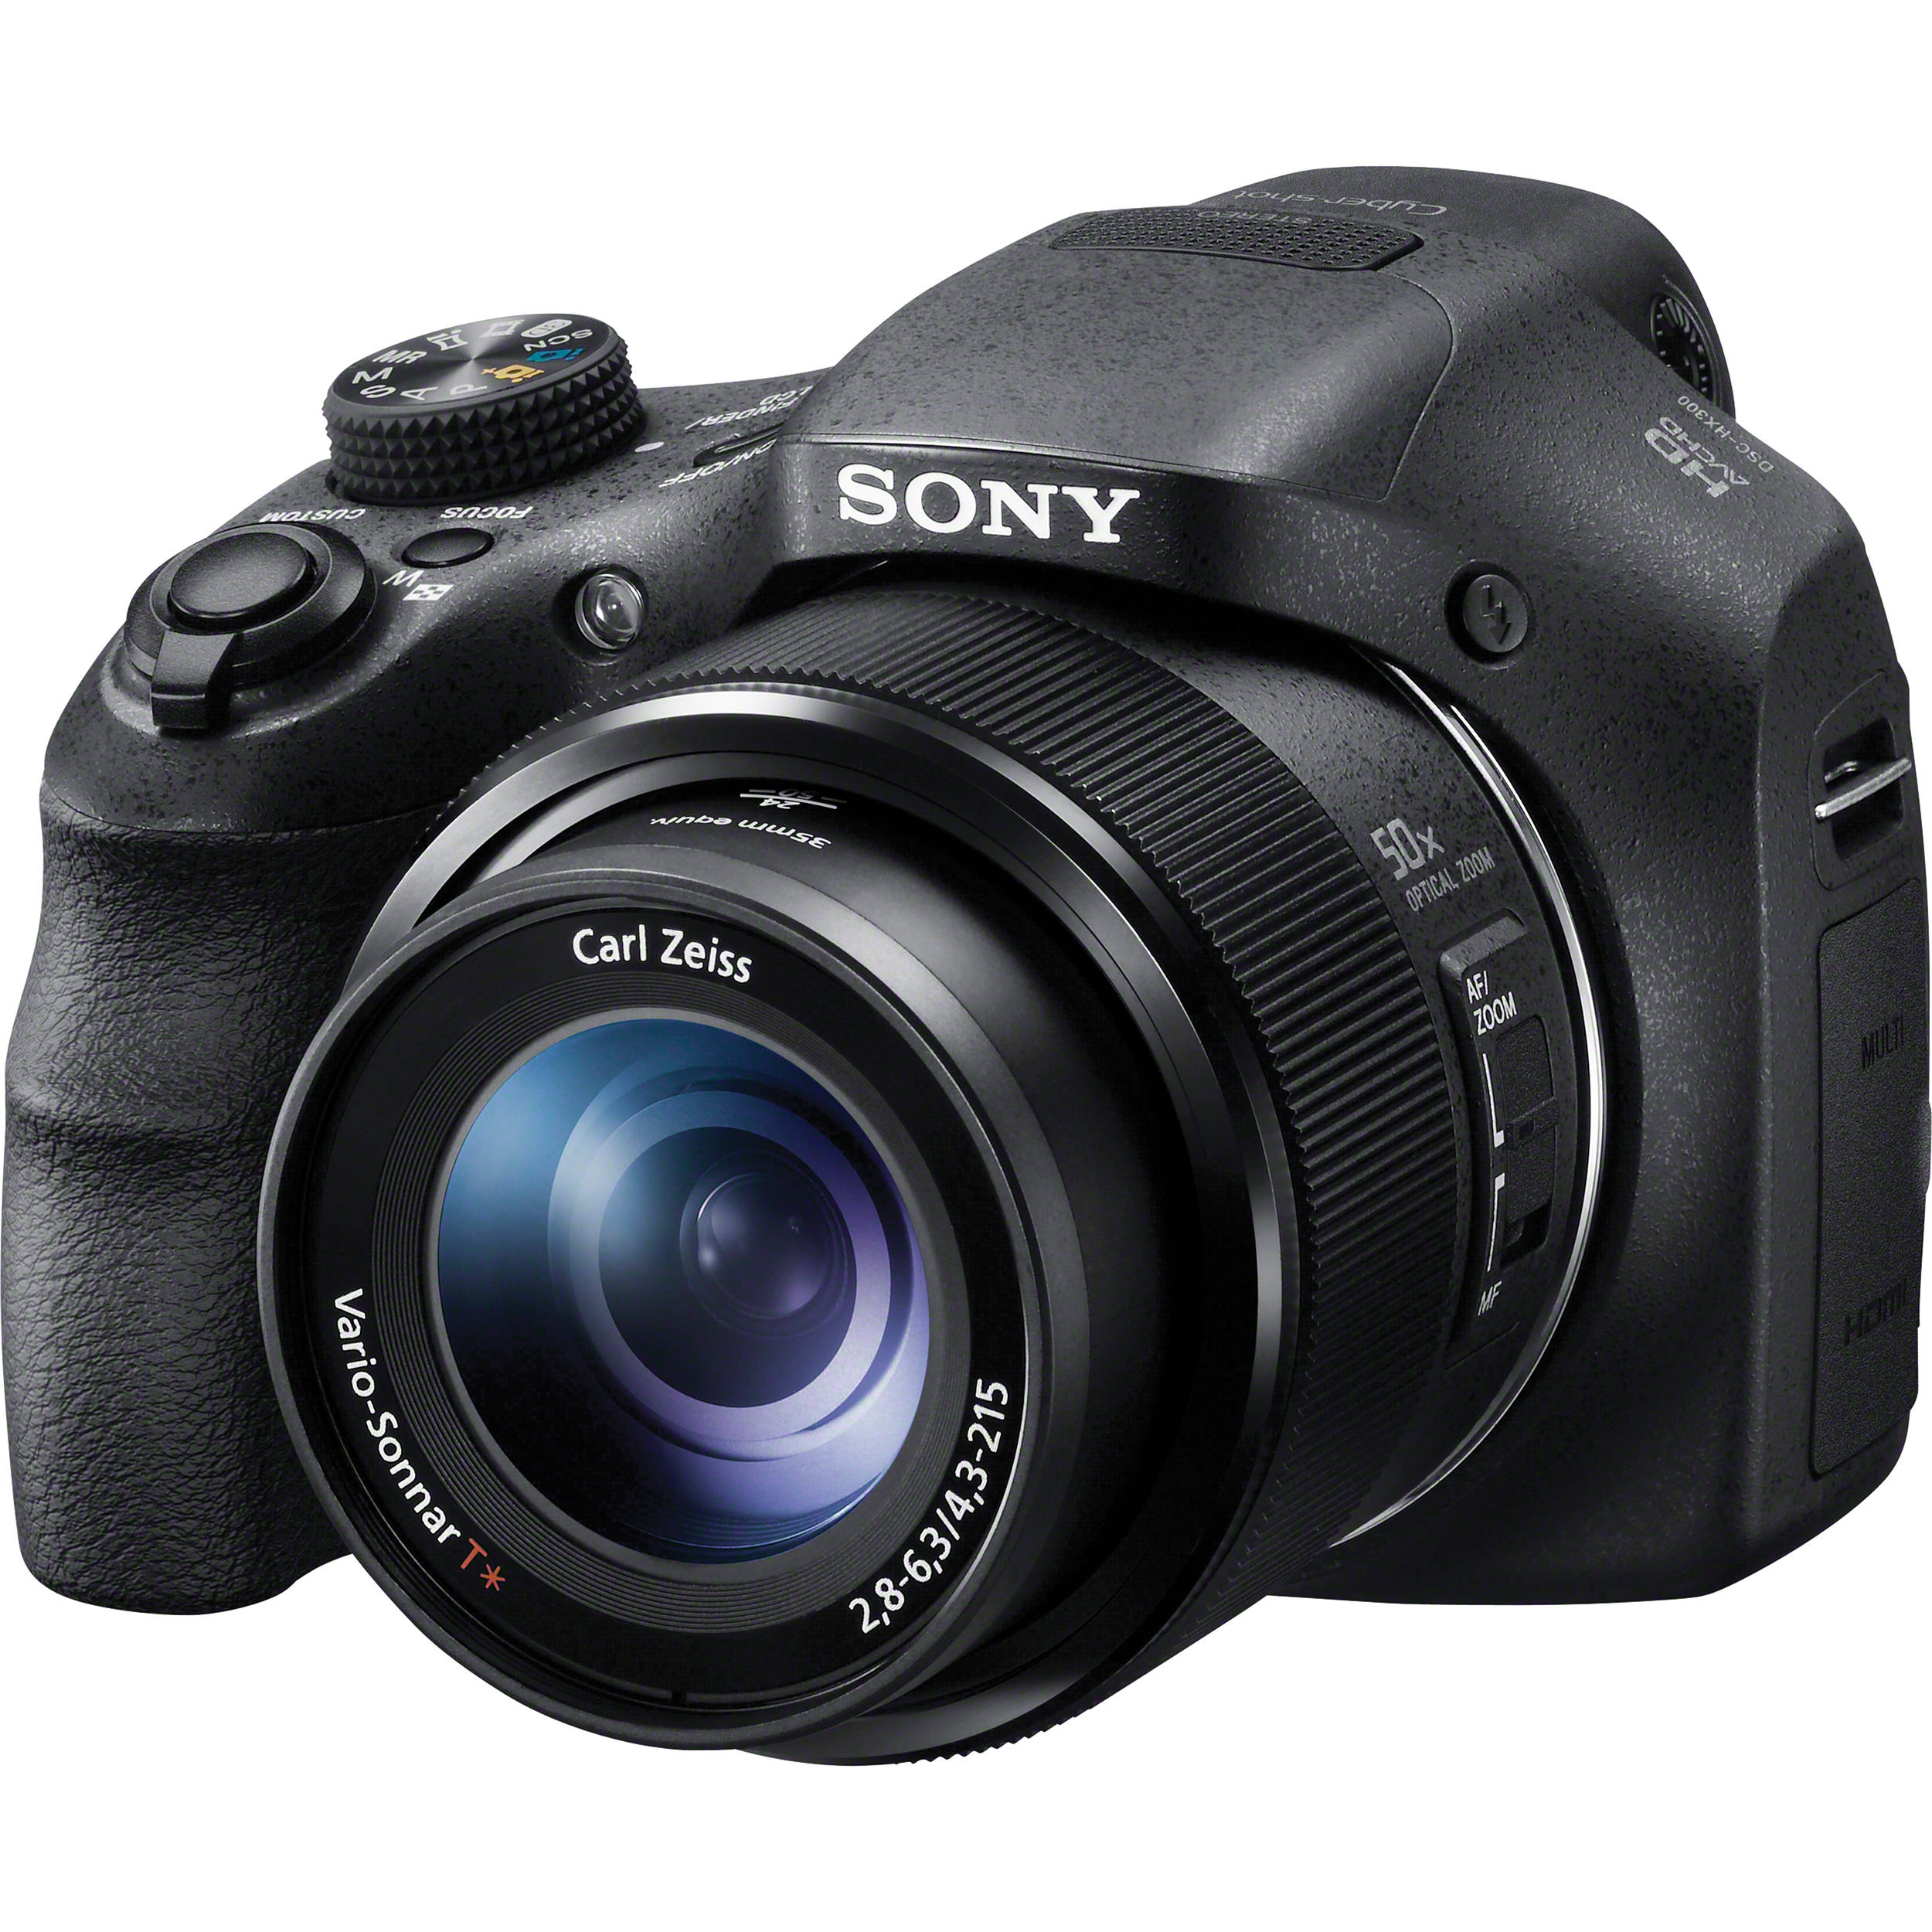 Sony Cyber-shot DSC-HX300 Digital Camera